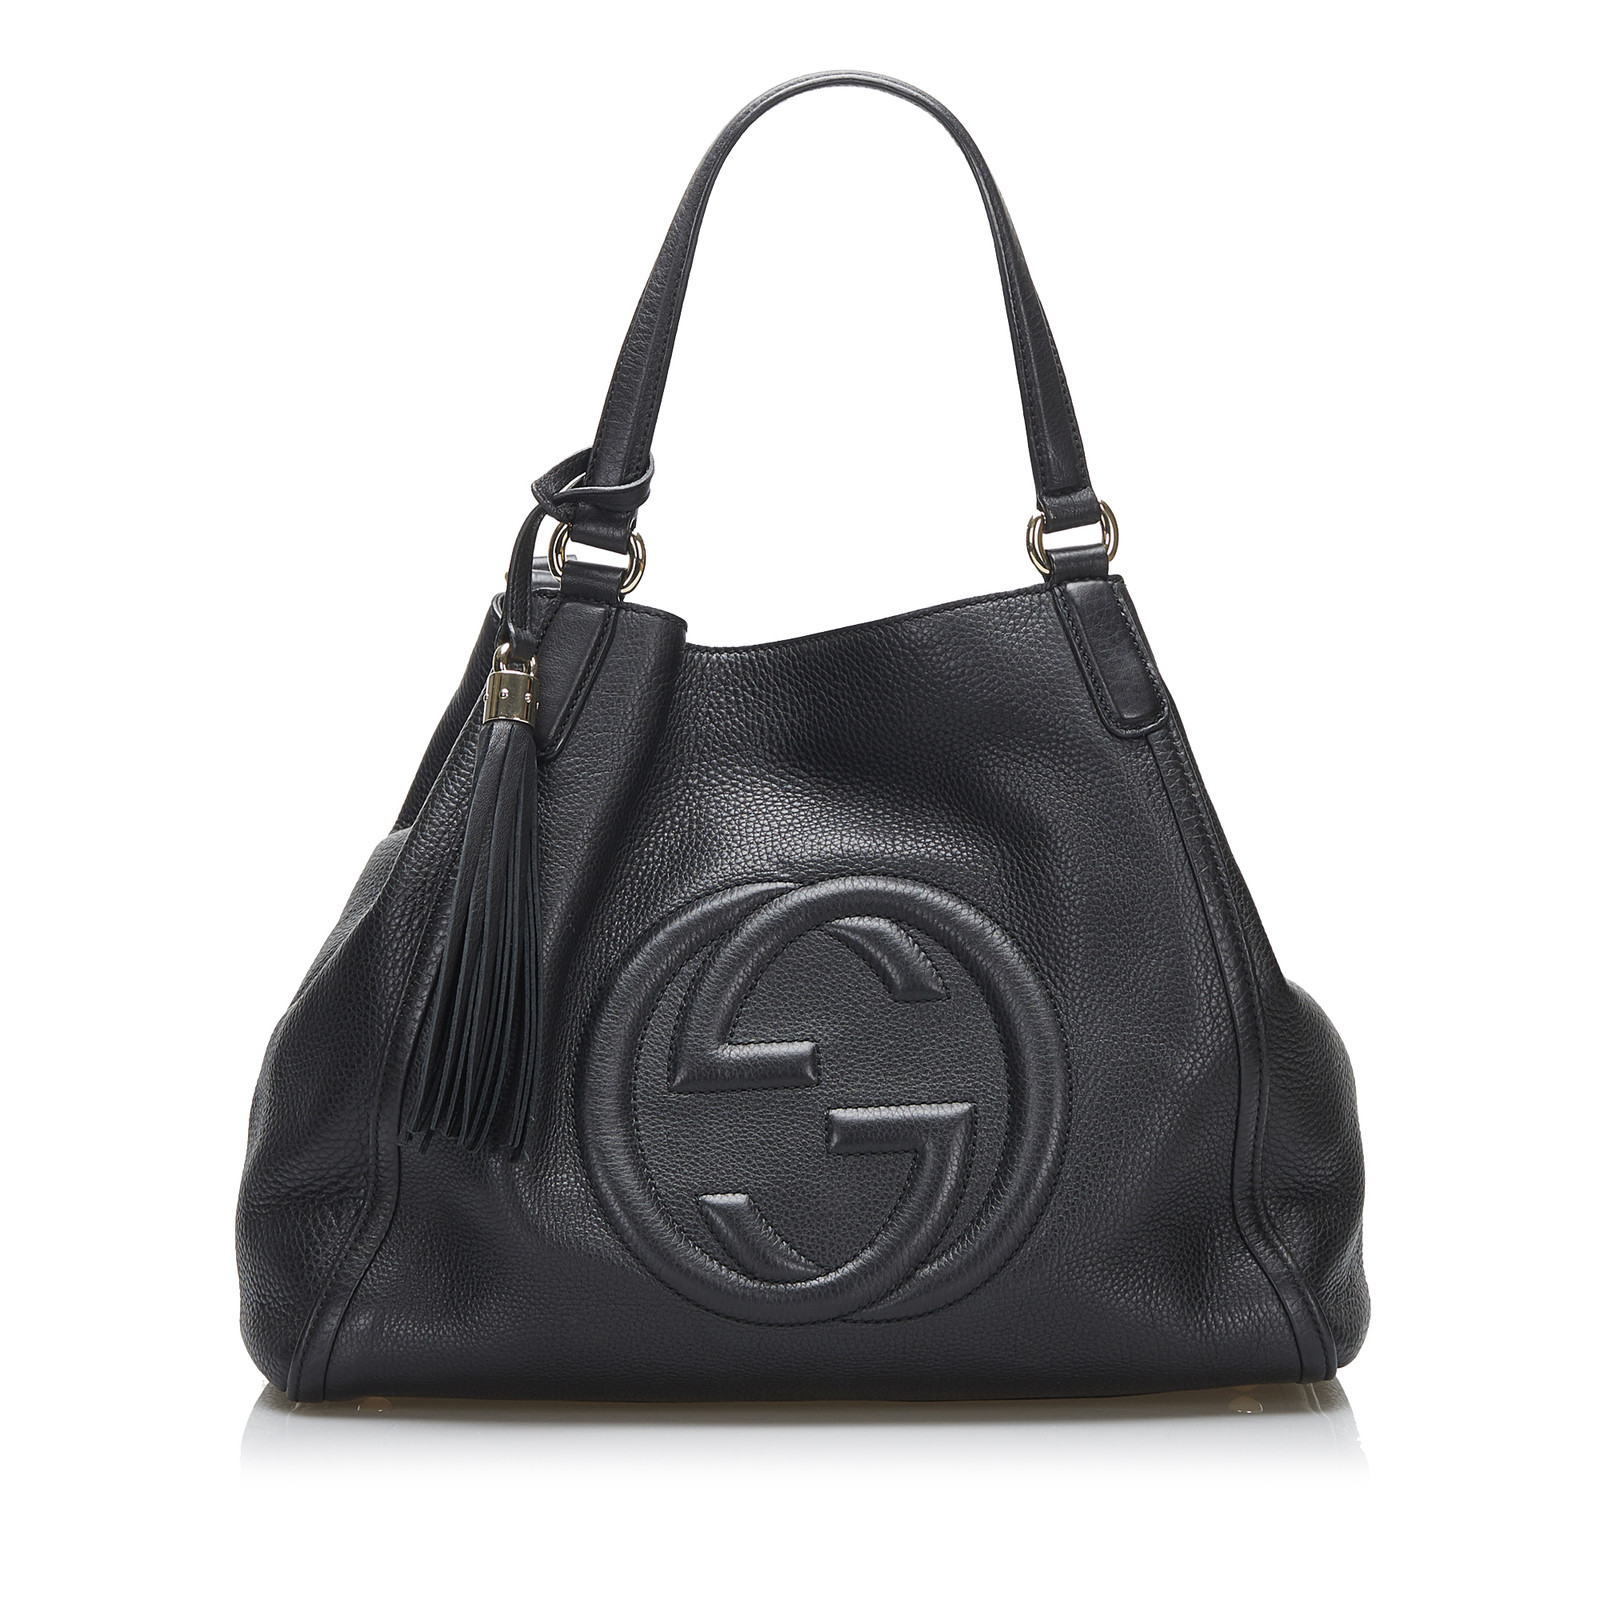 GG Marmont Top Handle Medium 32cm Leather in Black